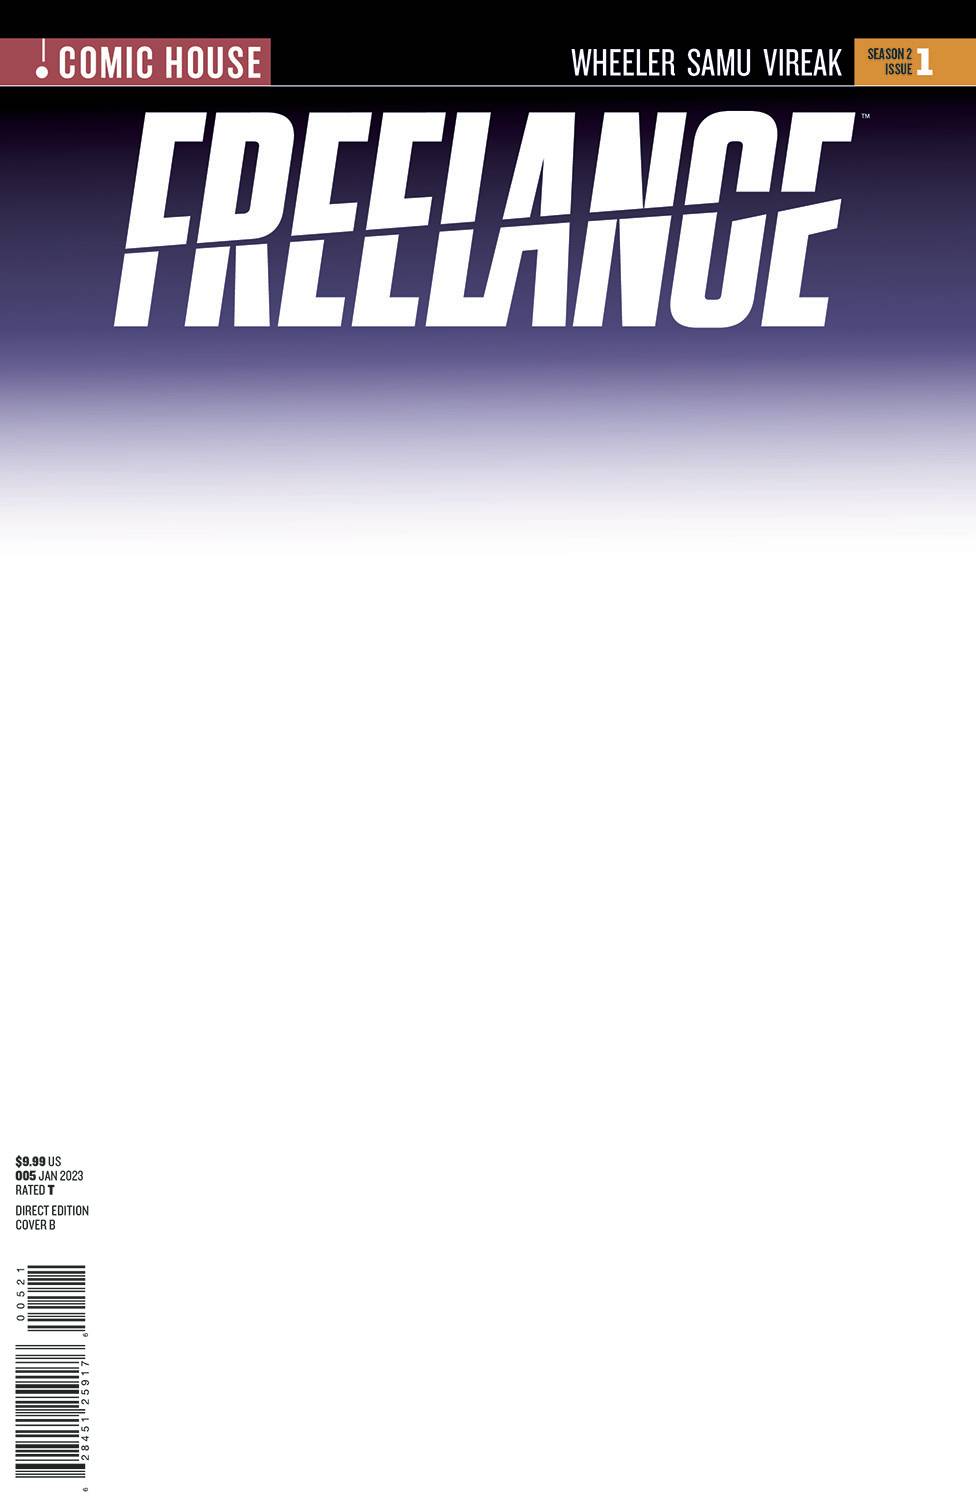 Freelance Season 2 #1 (Of 5) Cvr B Sketch Cover (01/25/2023)